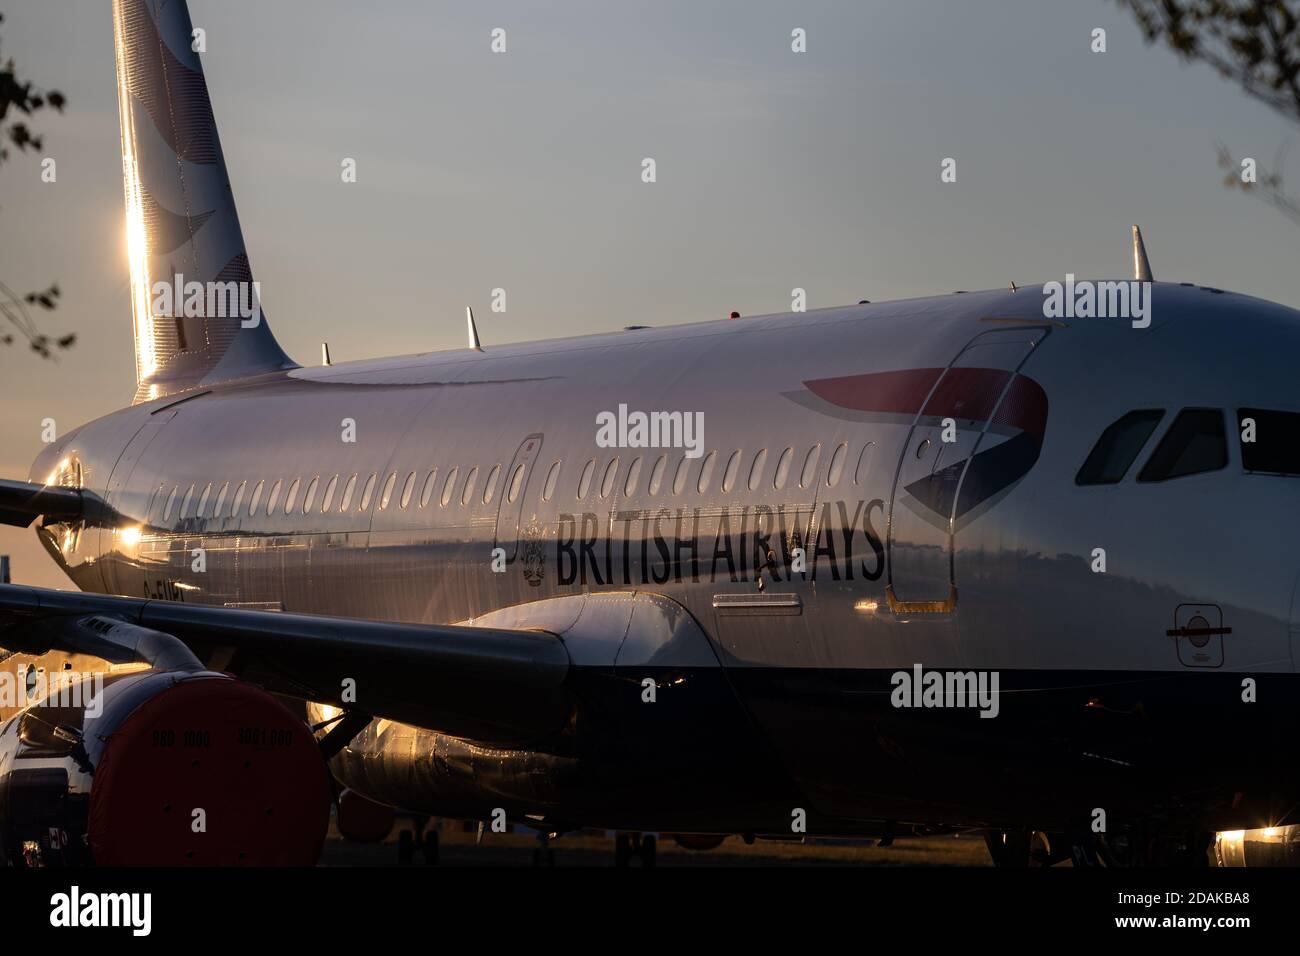 Grounded British Airways planes at Bournemouth International airport Stock Photo